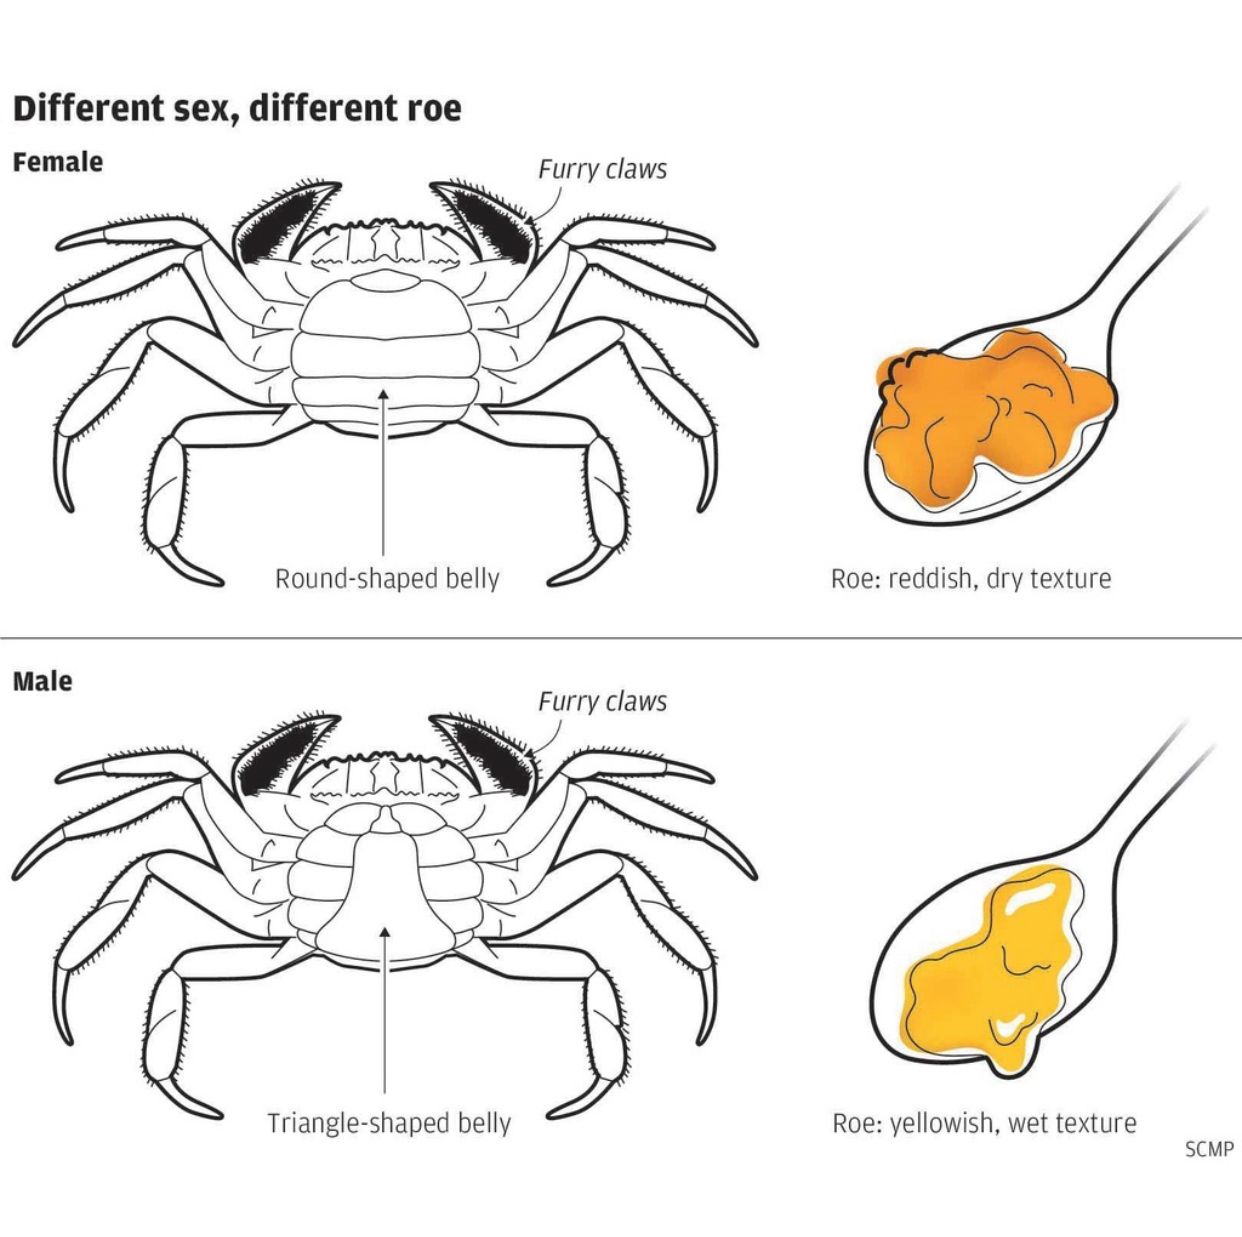 Mixed Jumbo Hairy Crab Combo 4